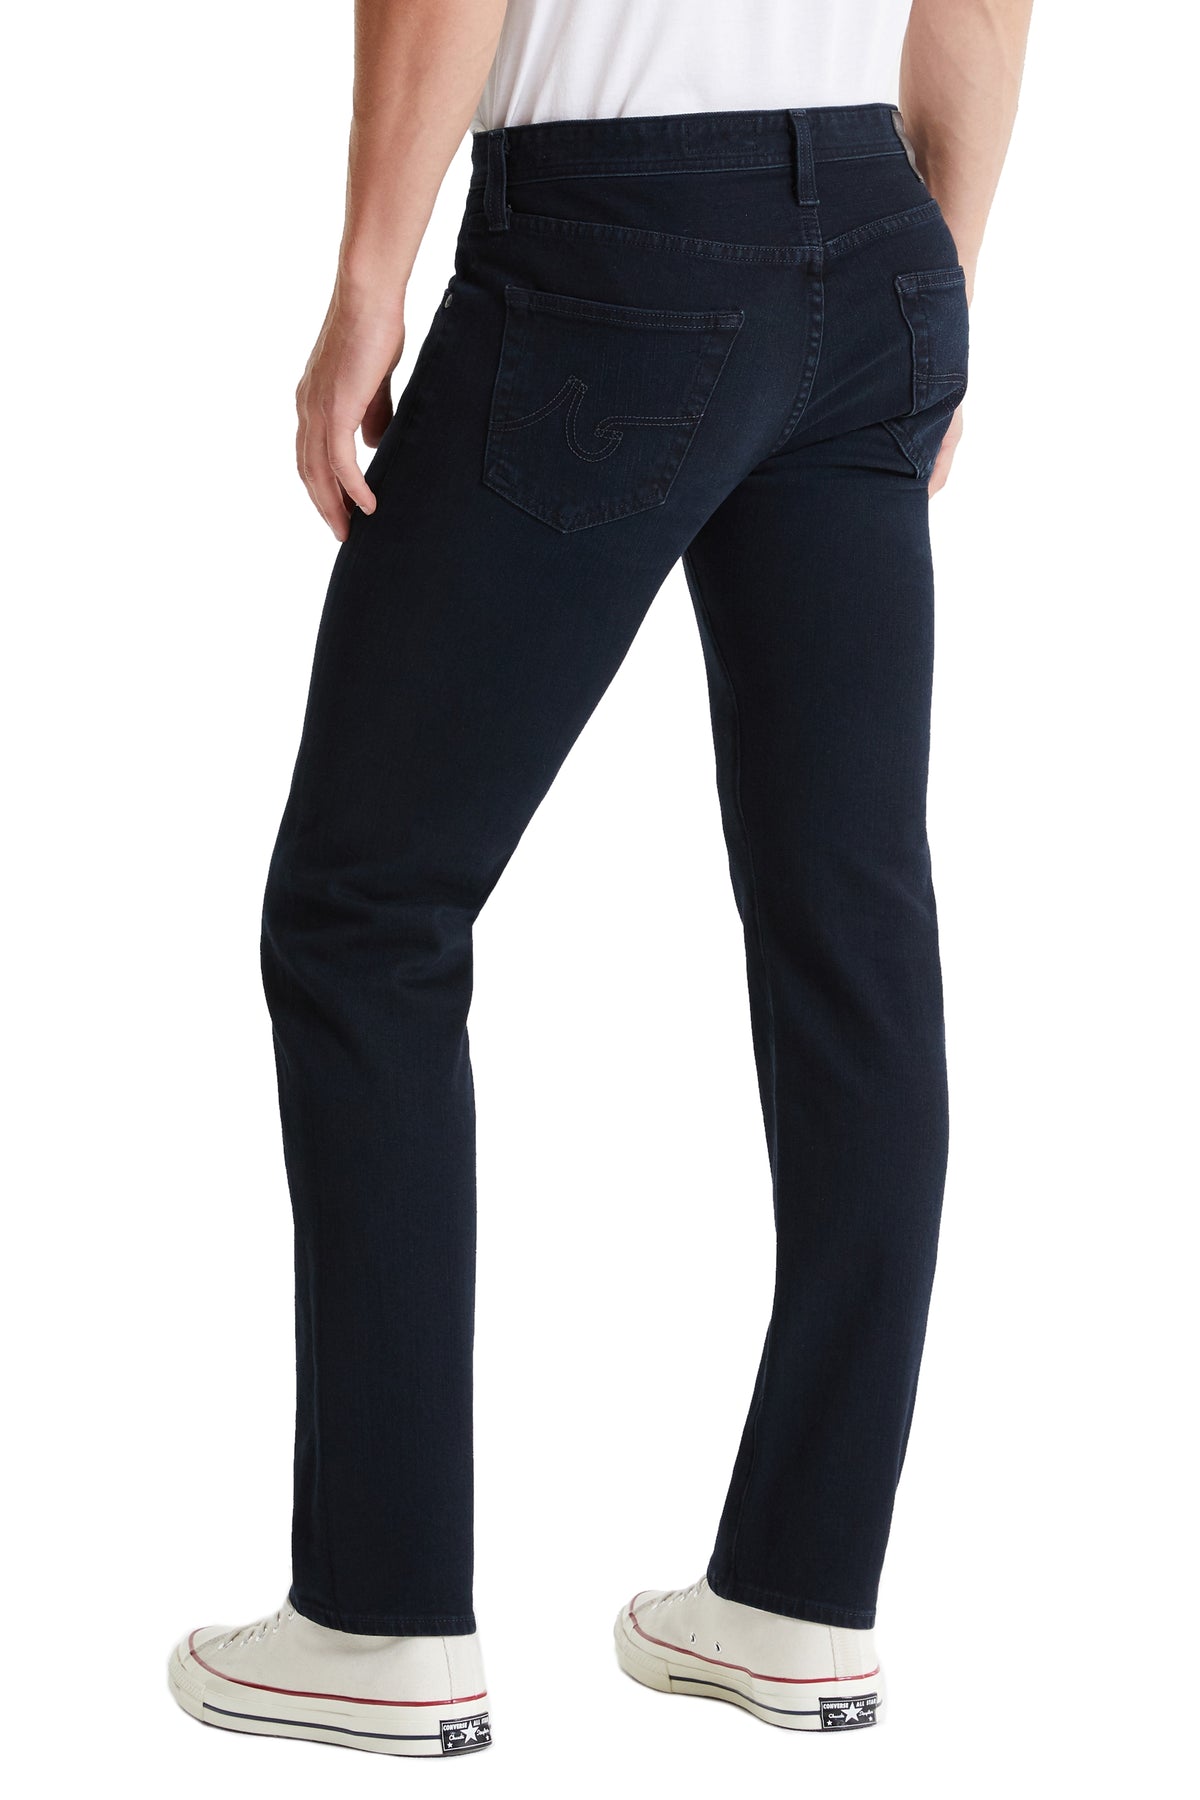 Brushed Company – Soft Superstretch Jeans MAC Seattle Denim Flexx Thread